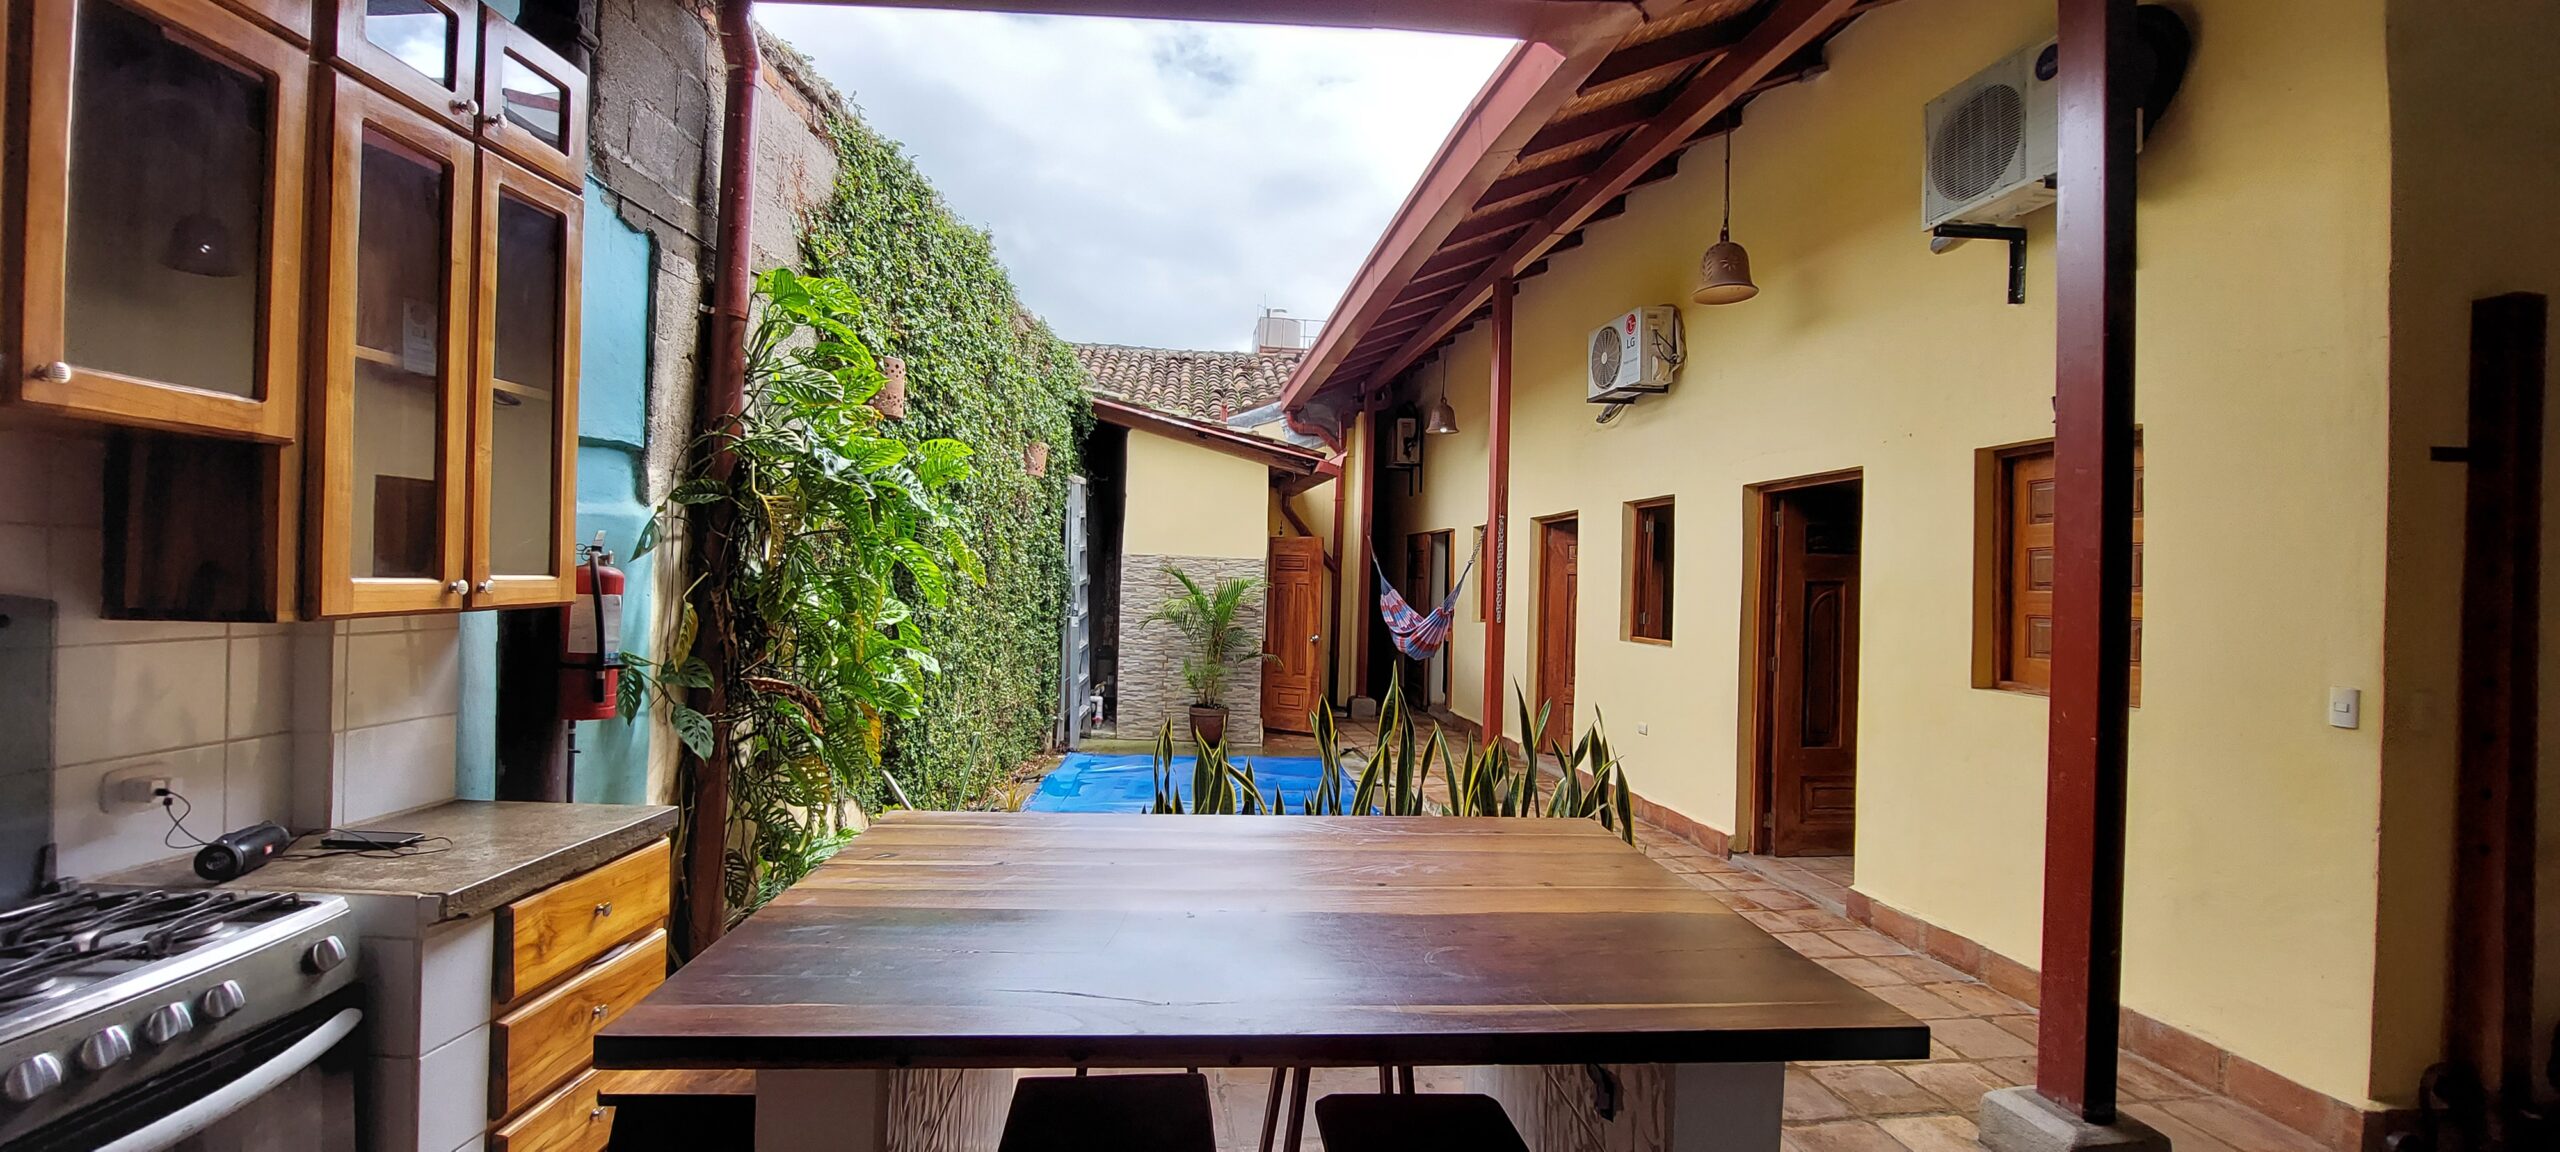 Budget Friendly Colonial home in Granada